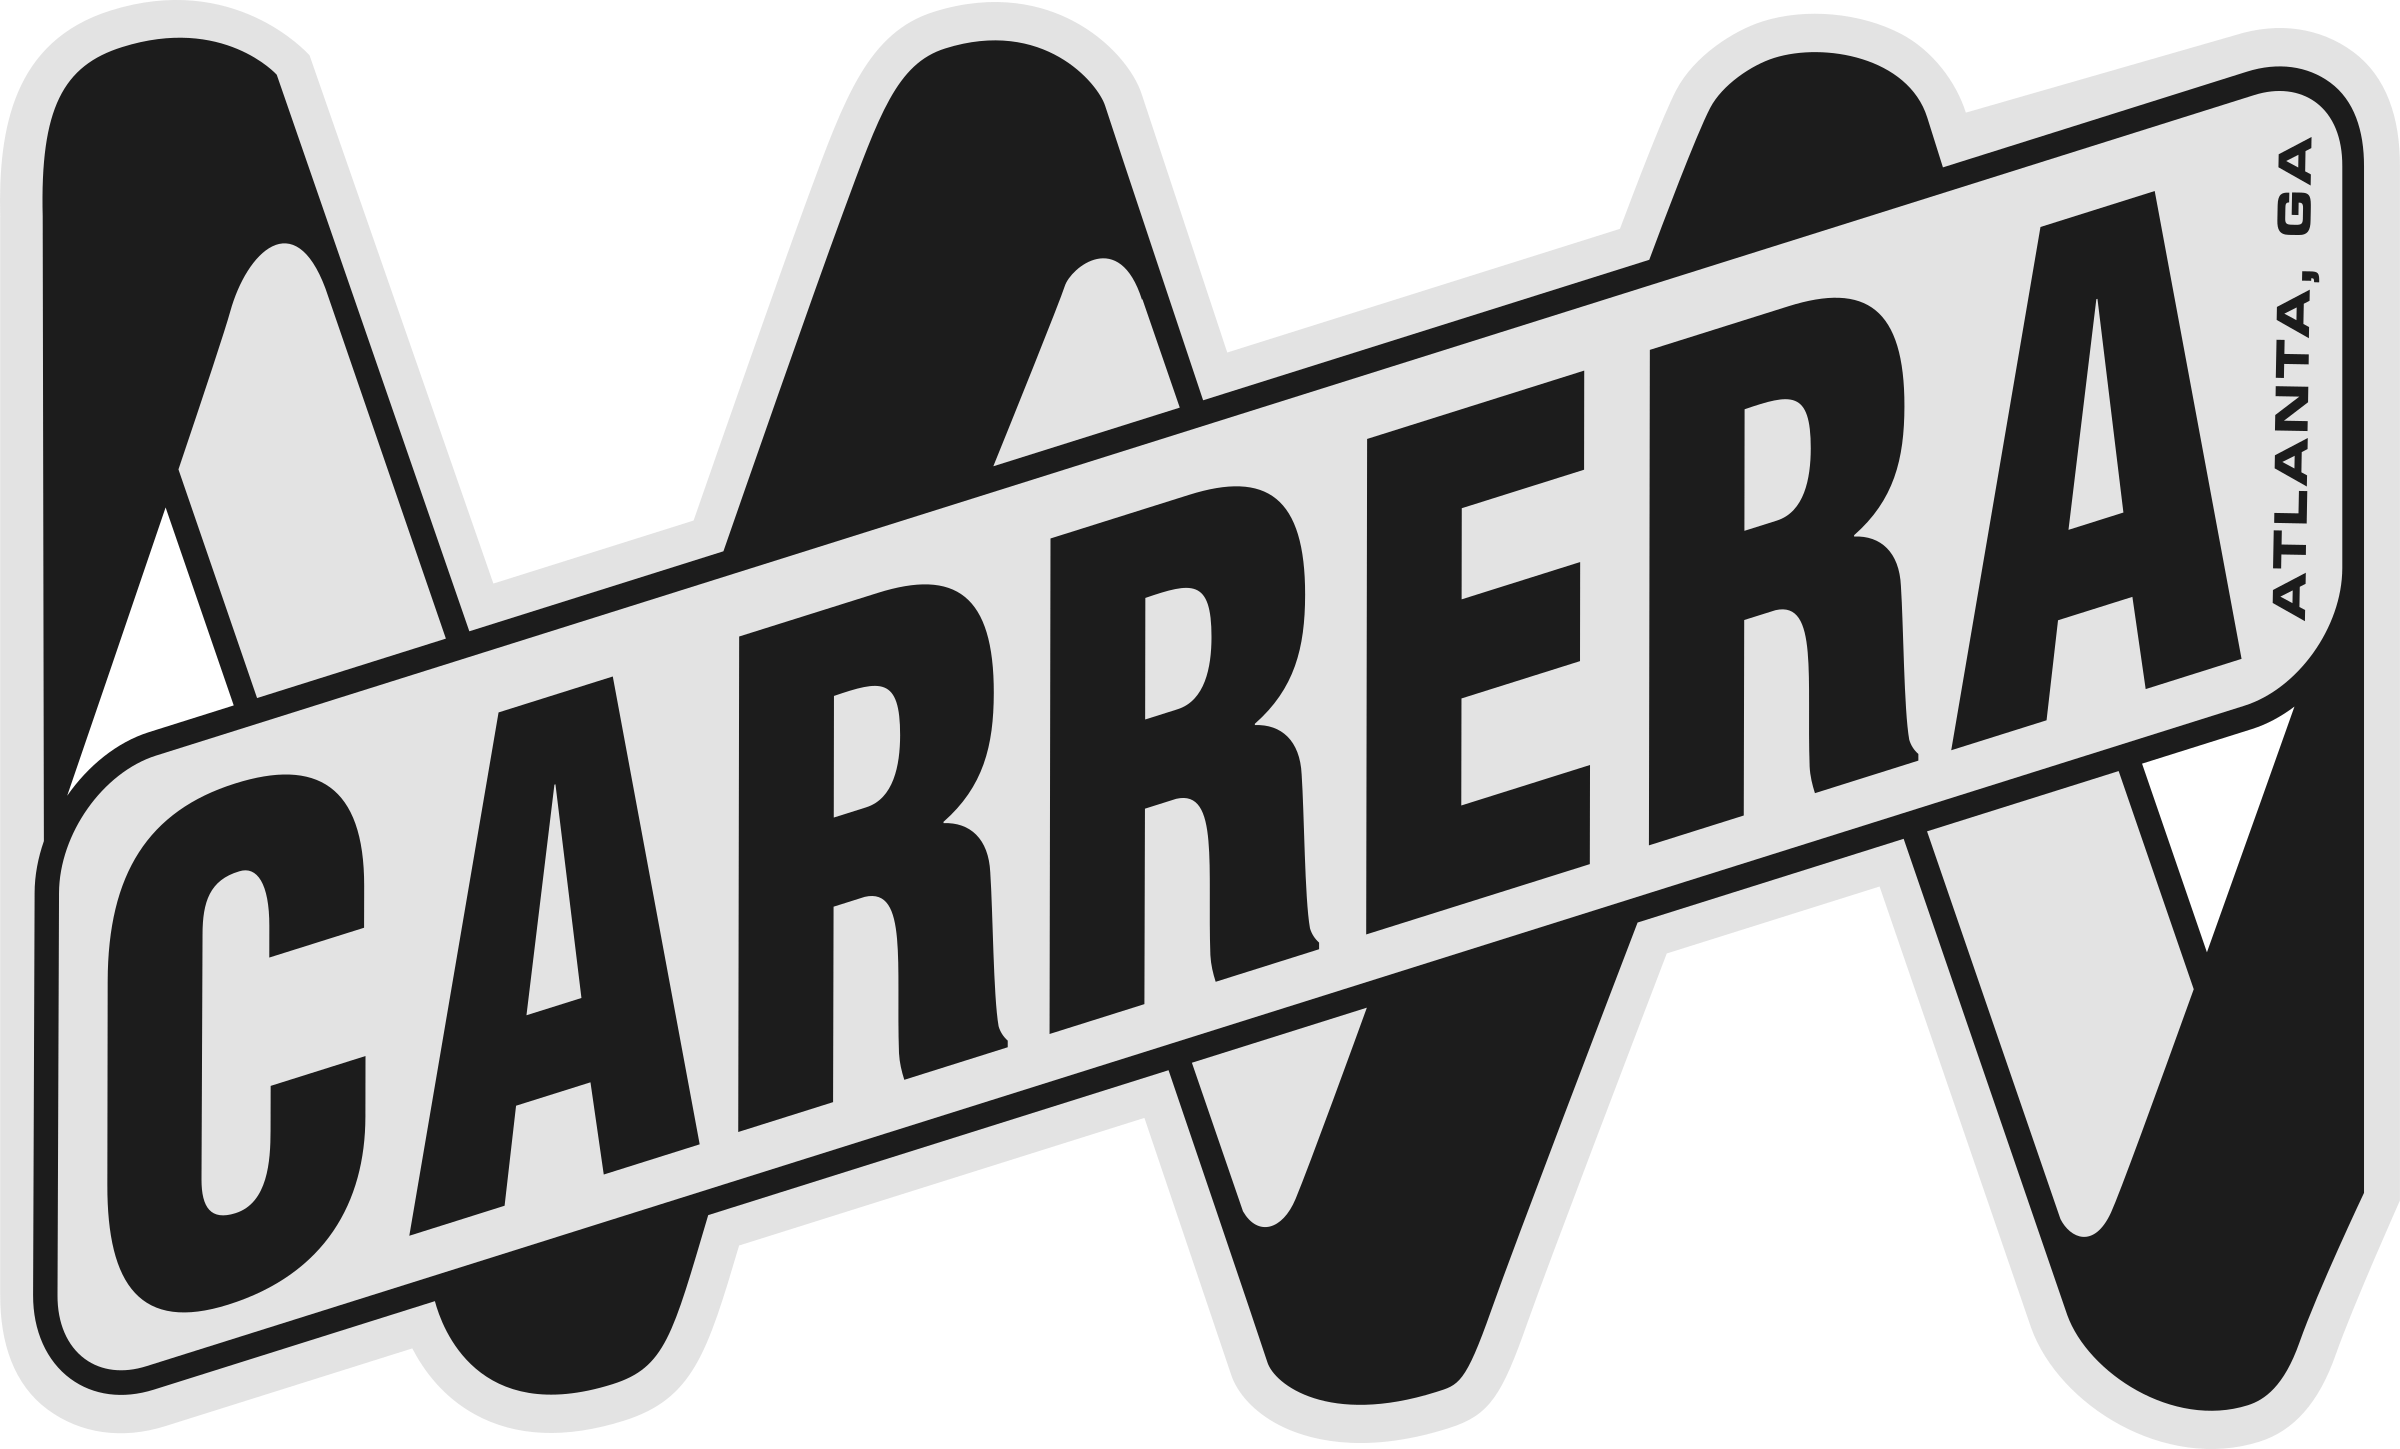 Carrera Logo - Carrera Logo PNG Transparent & SVG Vector - Freebie Supply